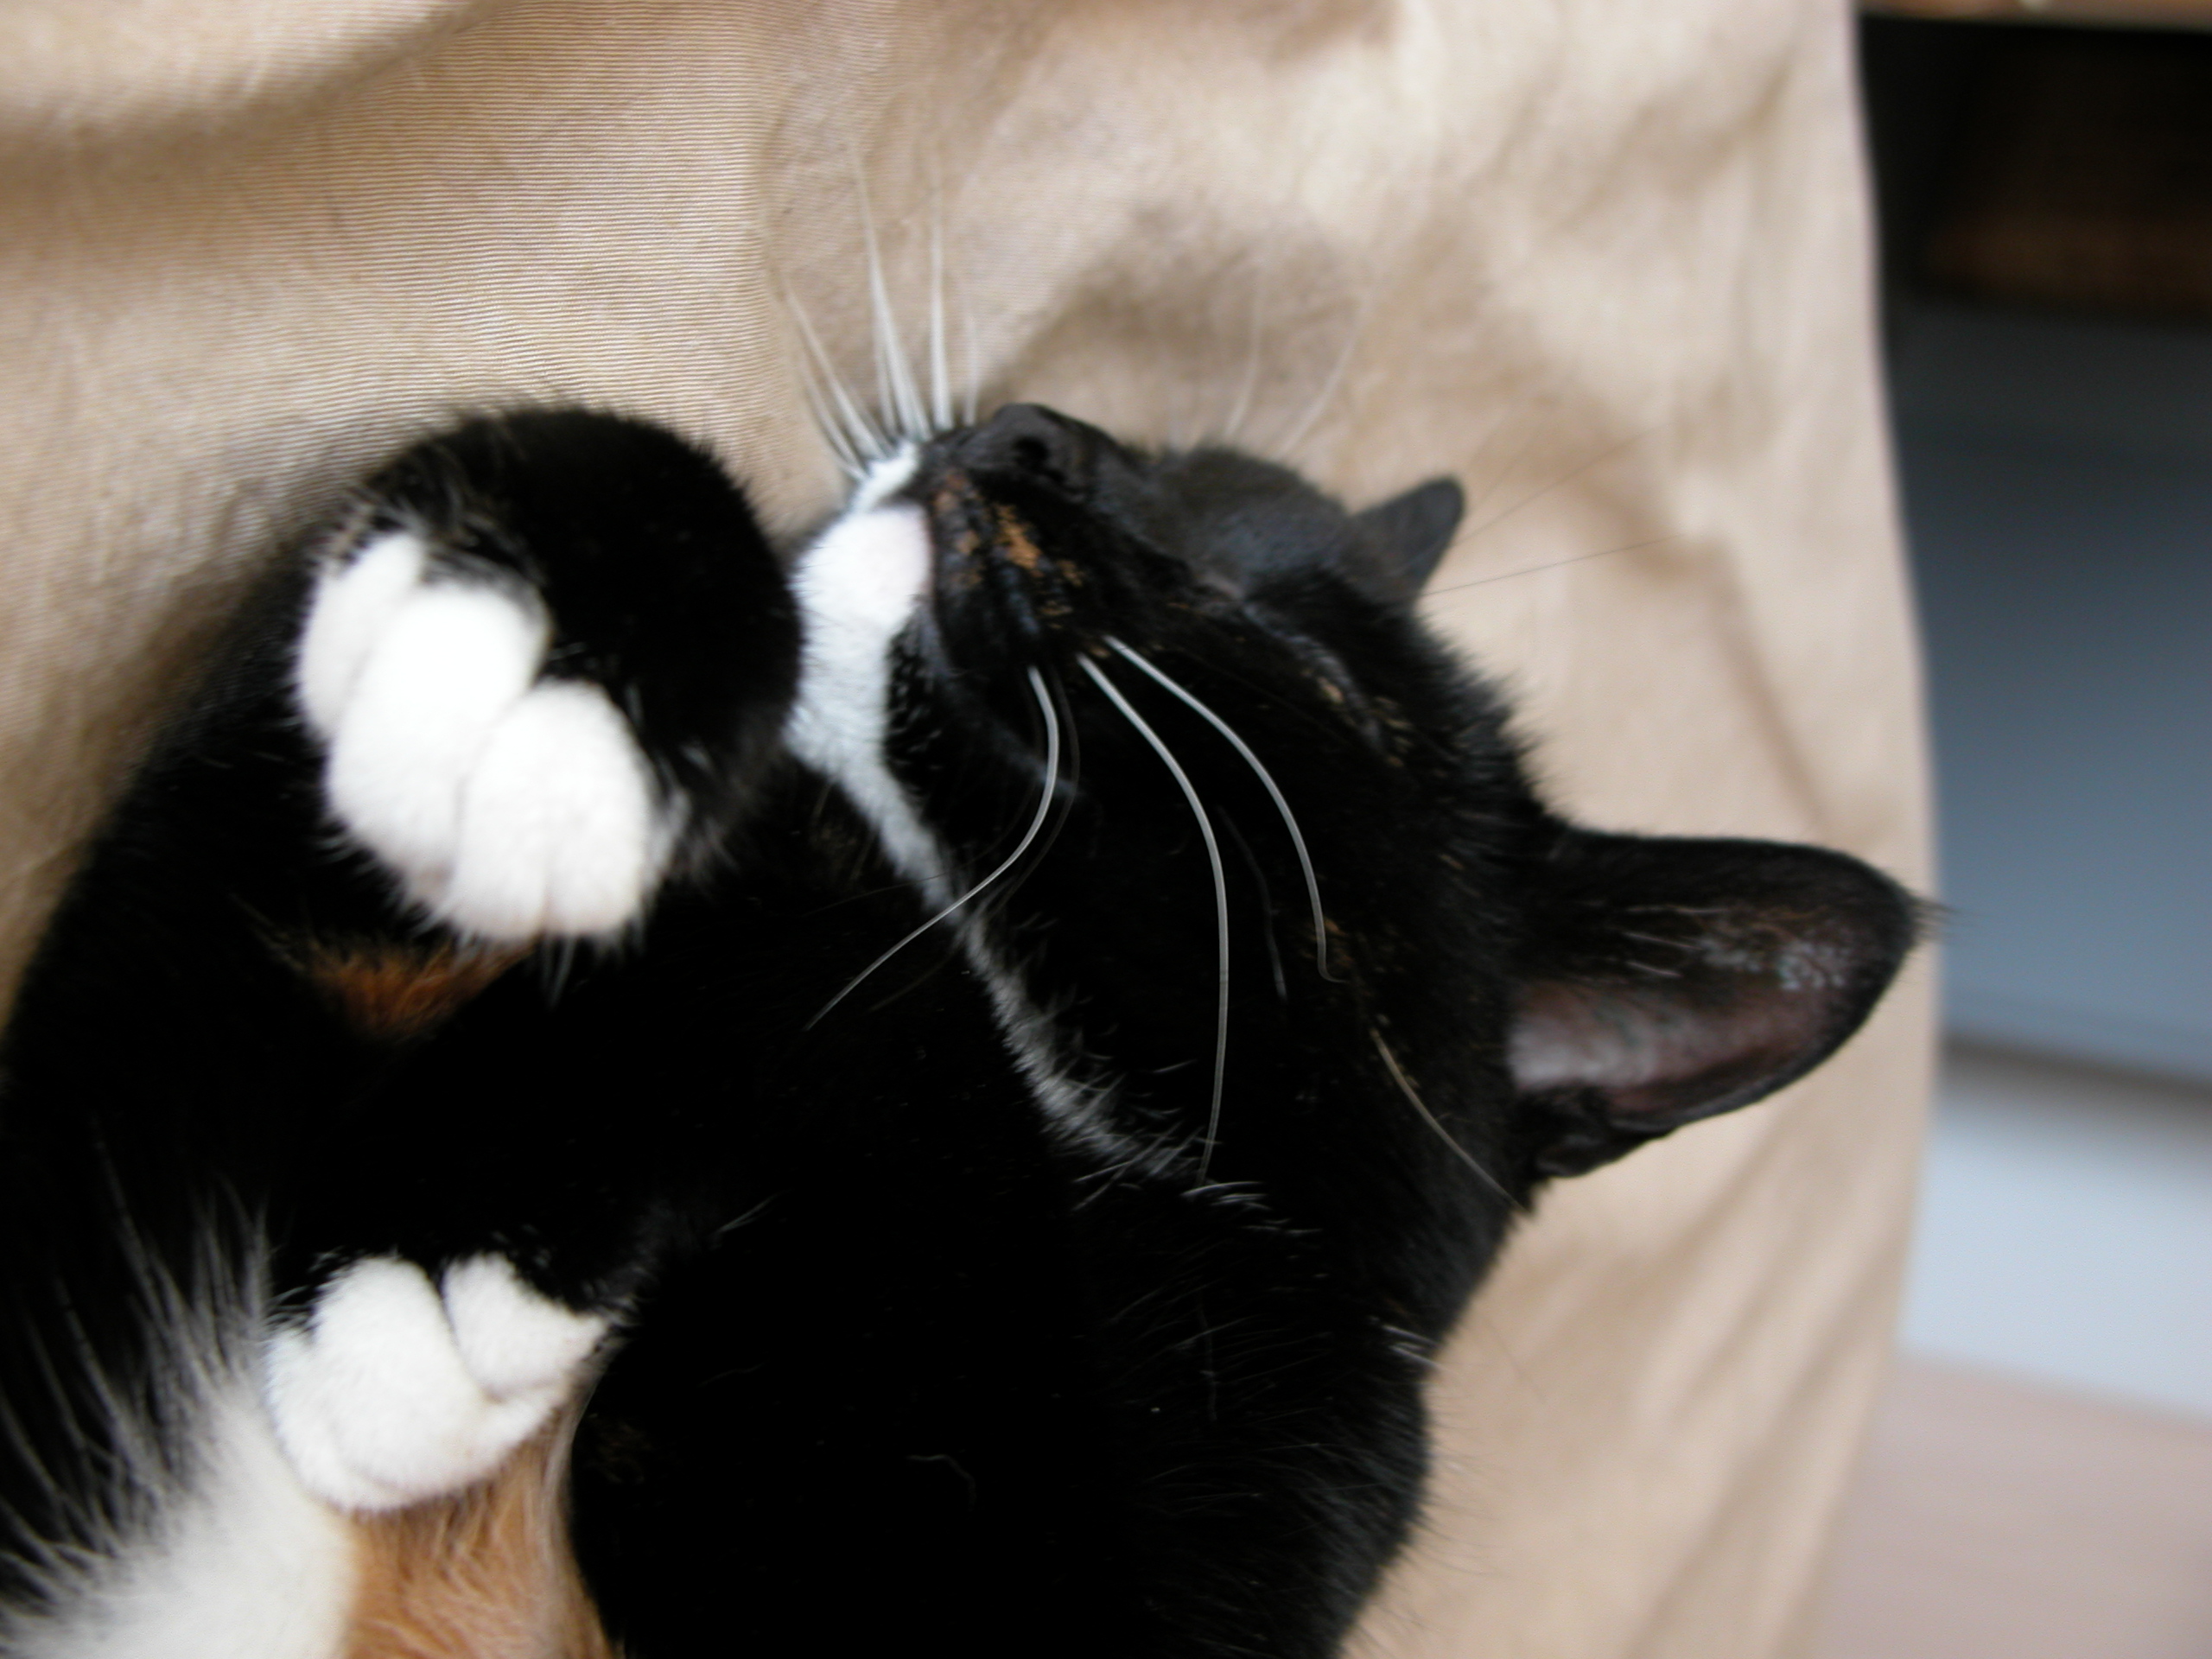 cat sleep sleeping dreaming kitten cute paws black and white